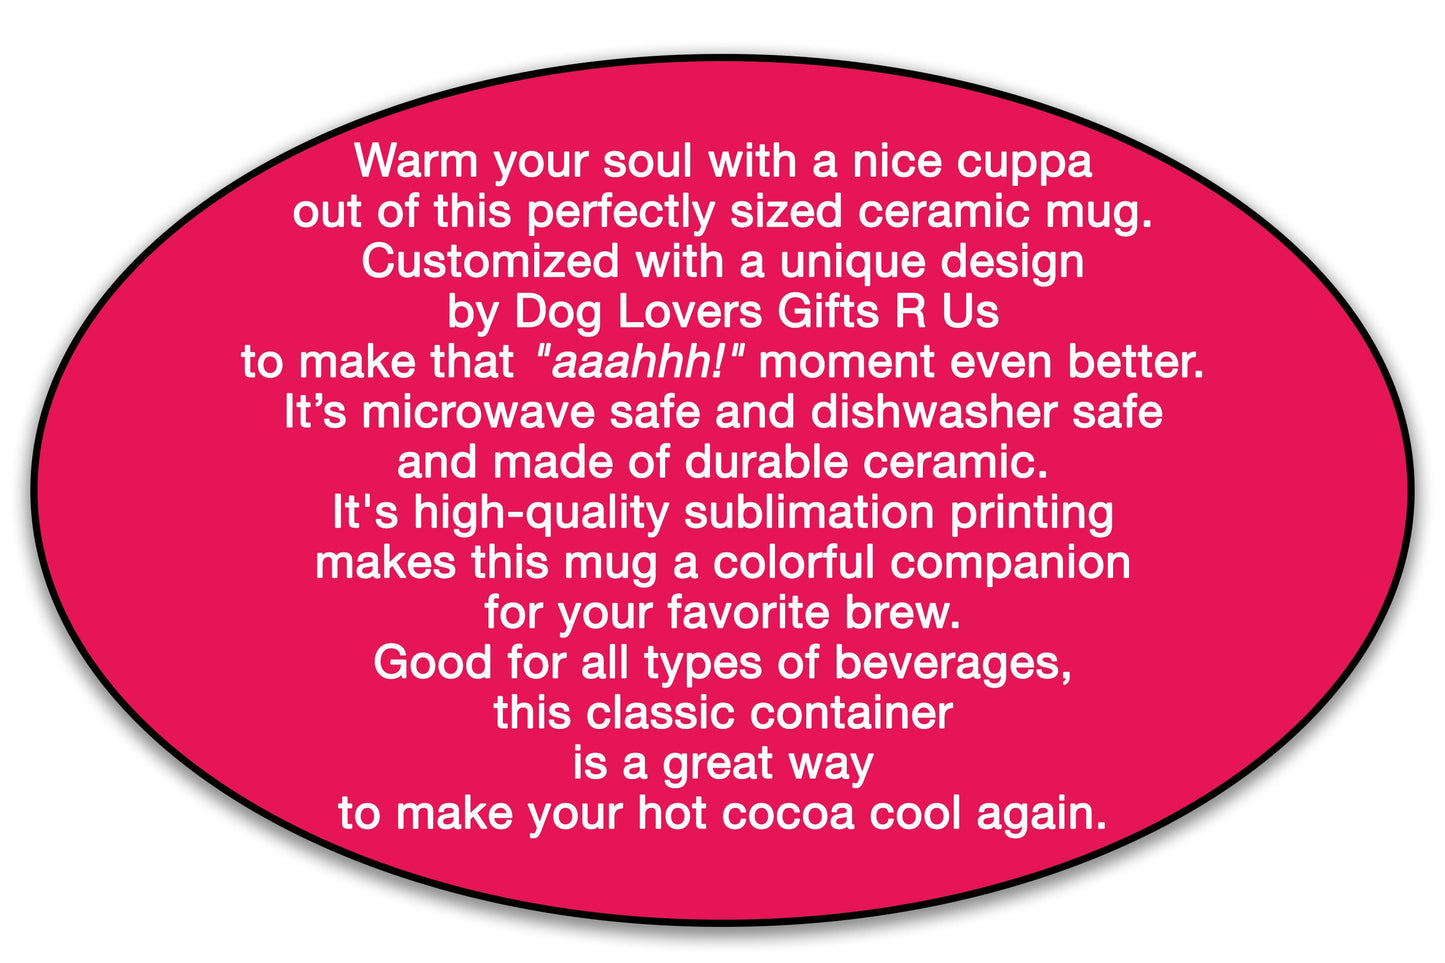 Cavalier Mug, Coffee Mug, String of Hearts, Cute Dog Mug, Fur Mama, Dog Mama, Tea Cup, Cavalier Gift, King Charles Spaniel, Dog Mom, Pet Mug